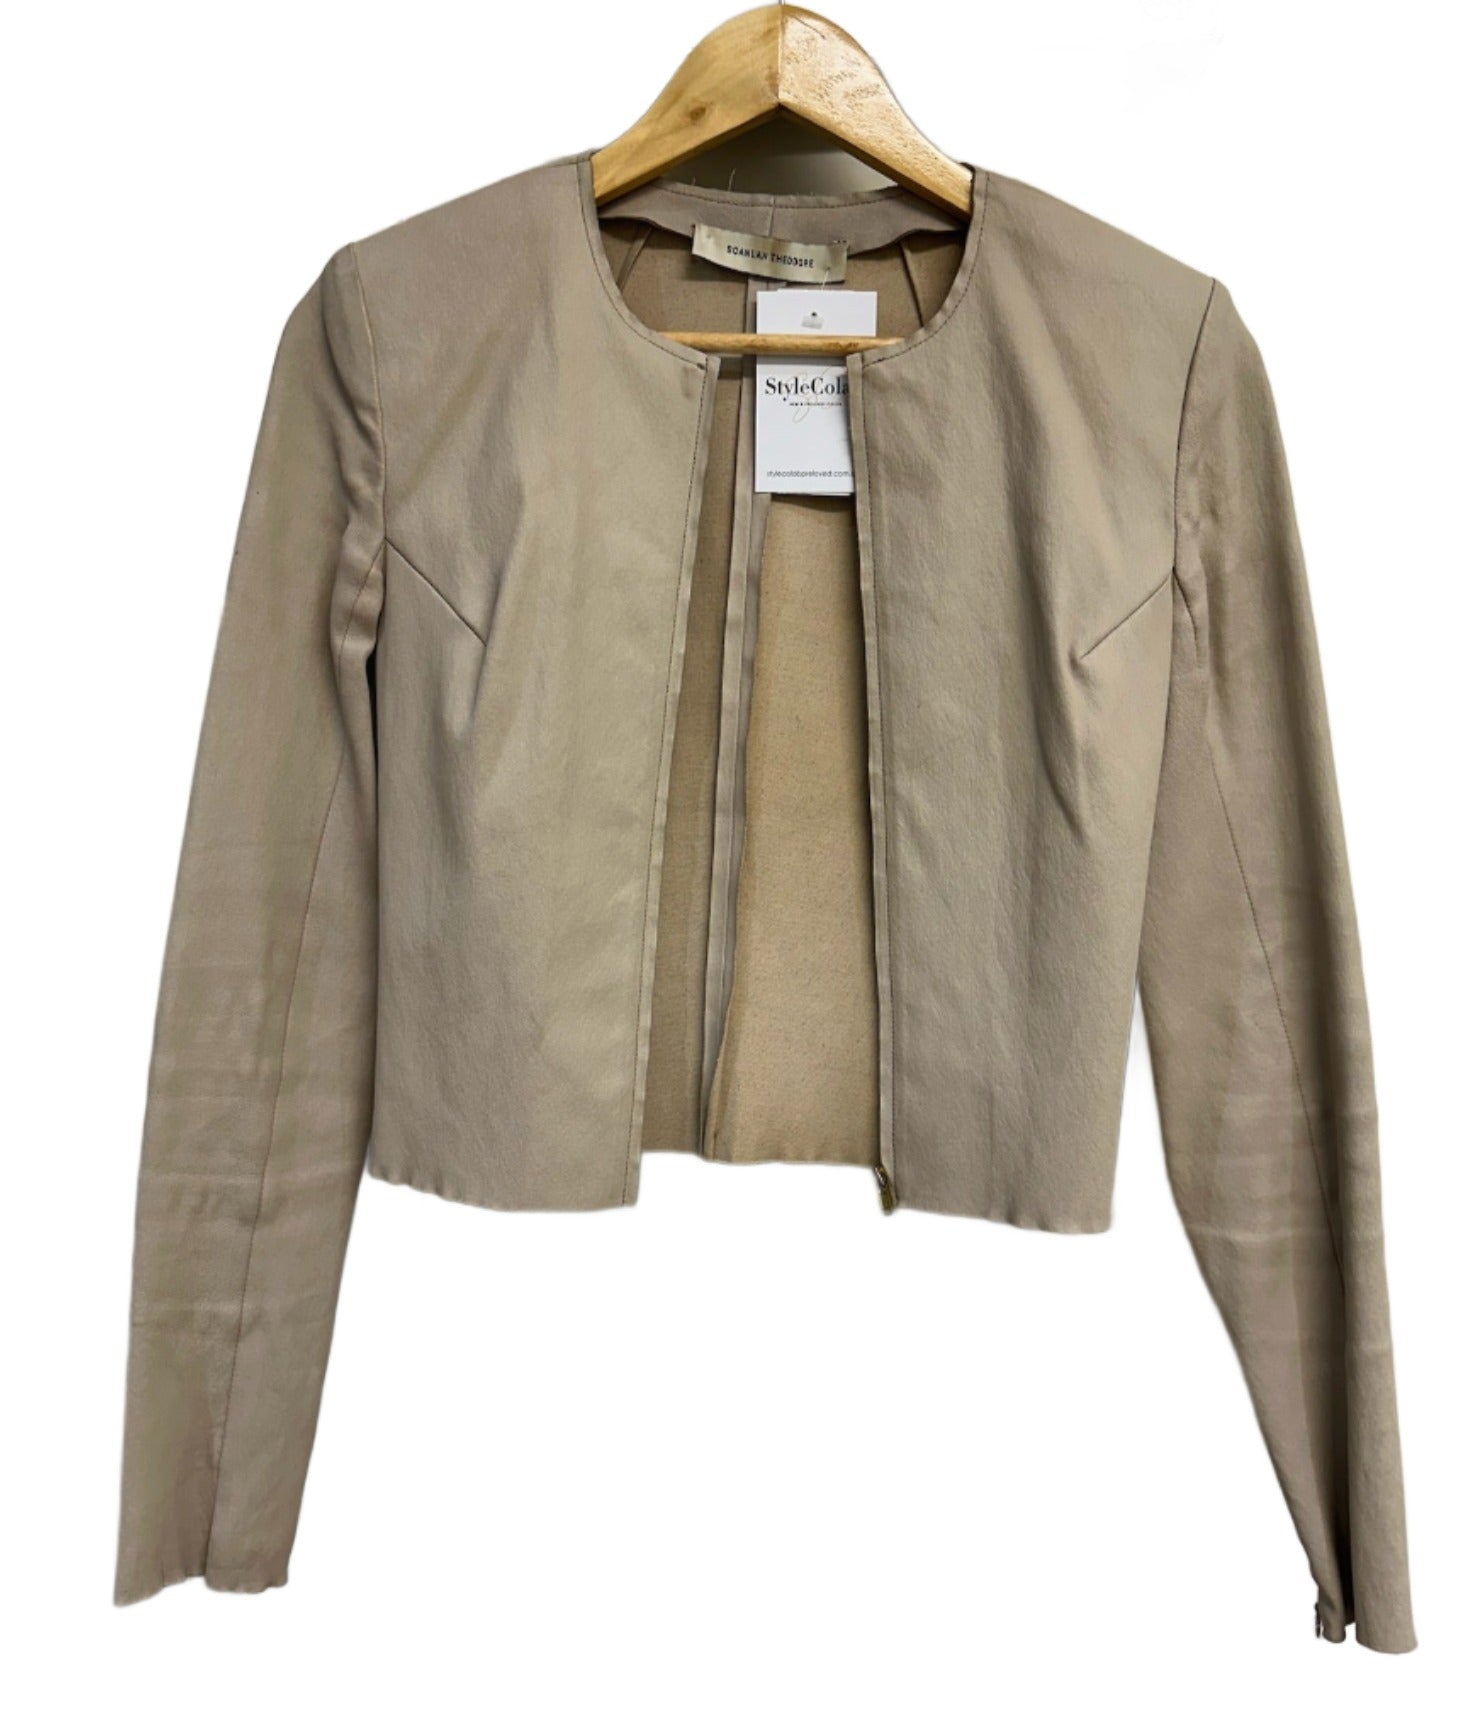 Scanlan Theodore Beige Leather Jacket